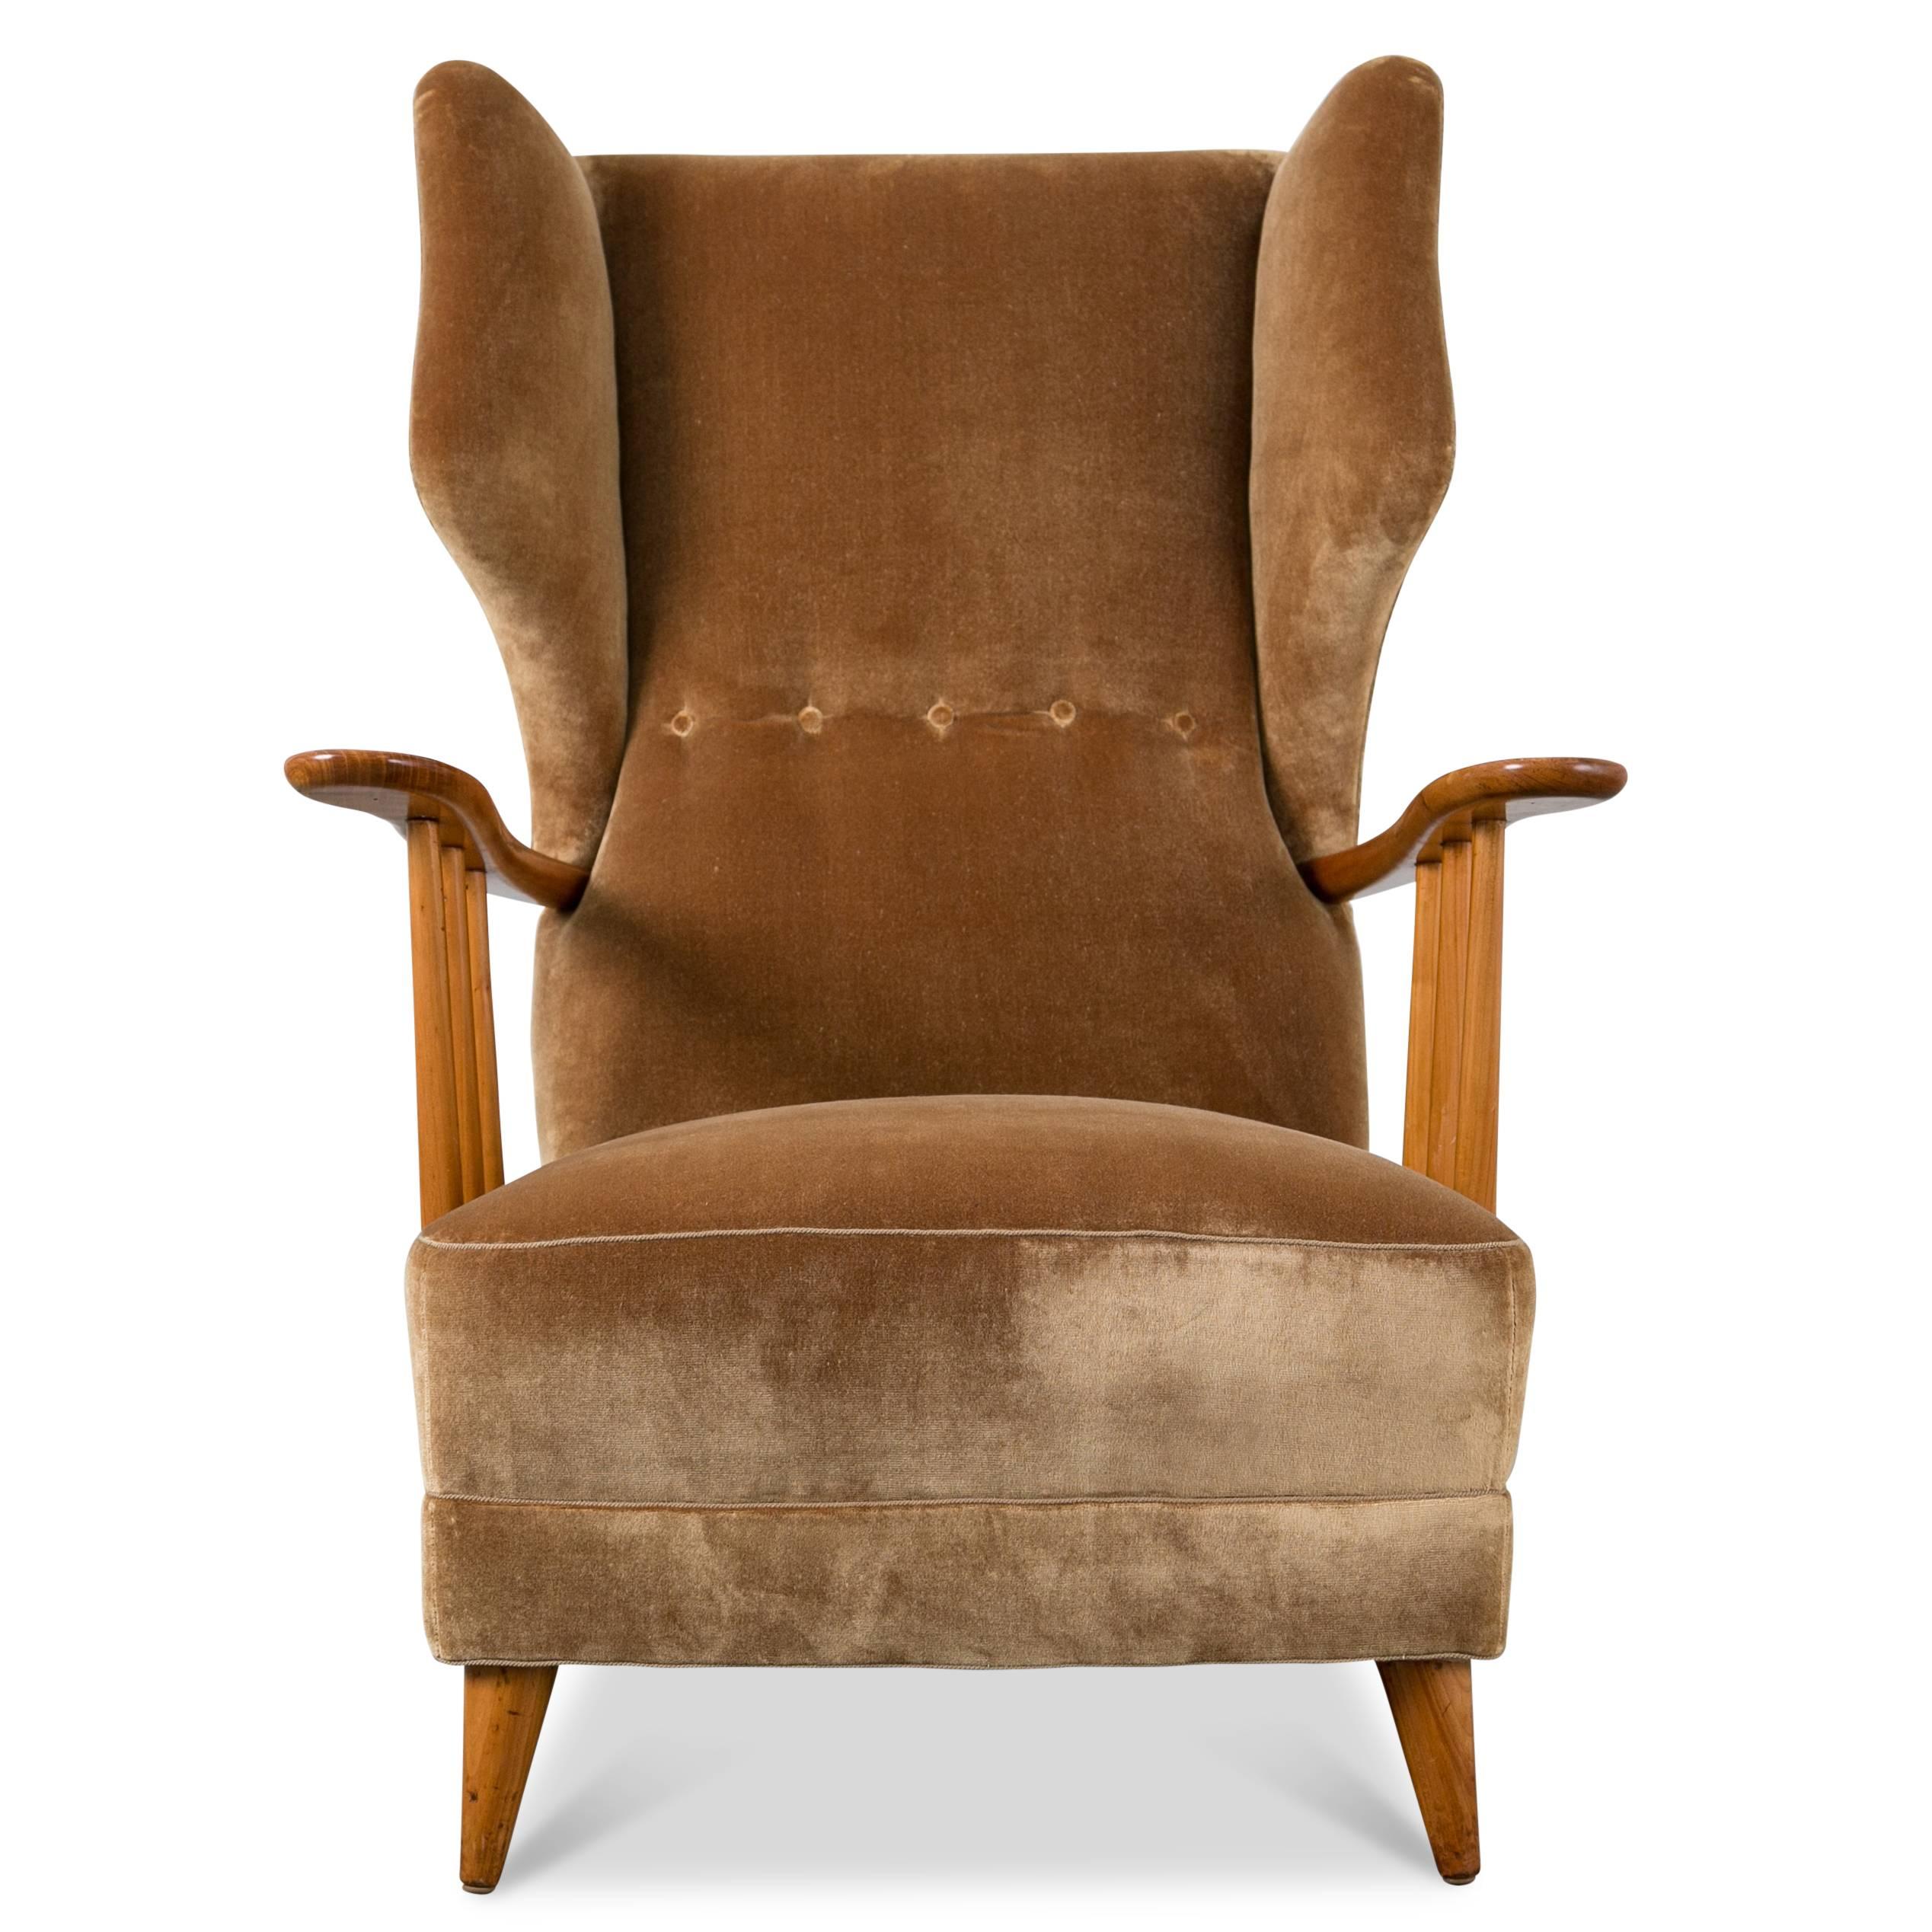 Modernist wingback lounge chair with walnut frame. Upholstered in gold silk velvet.